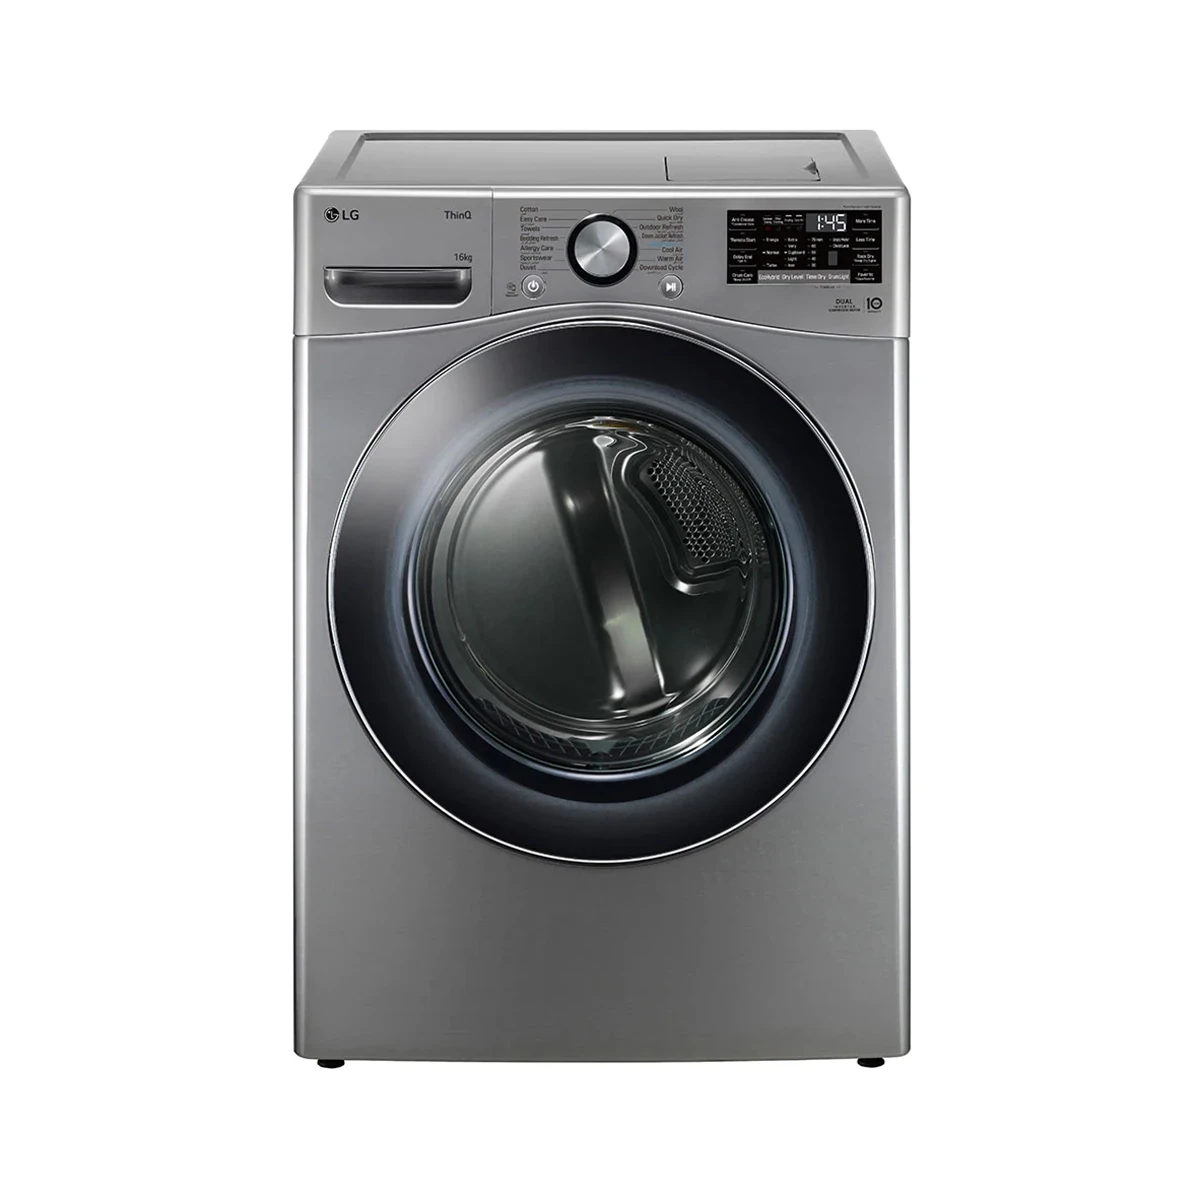 LG - Washing Machine 16Kg DUAL Inverter Dryer, sensor dry, Allergy care, Drum care, VCM color, ThinQ